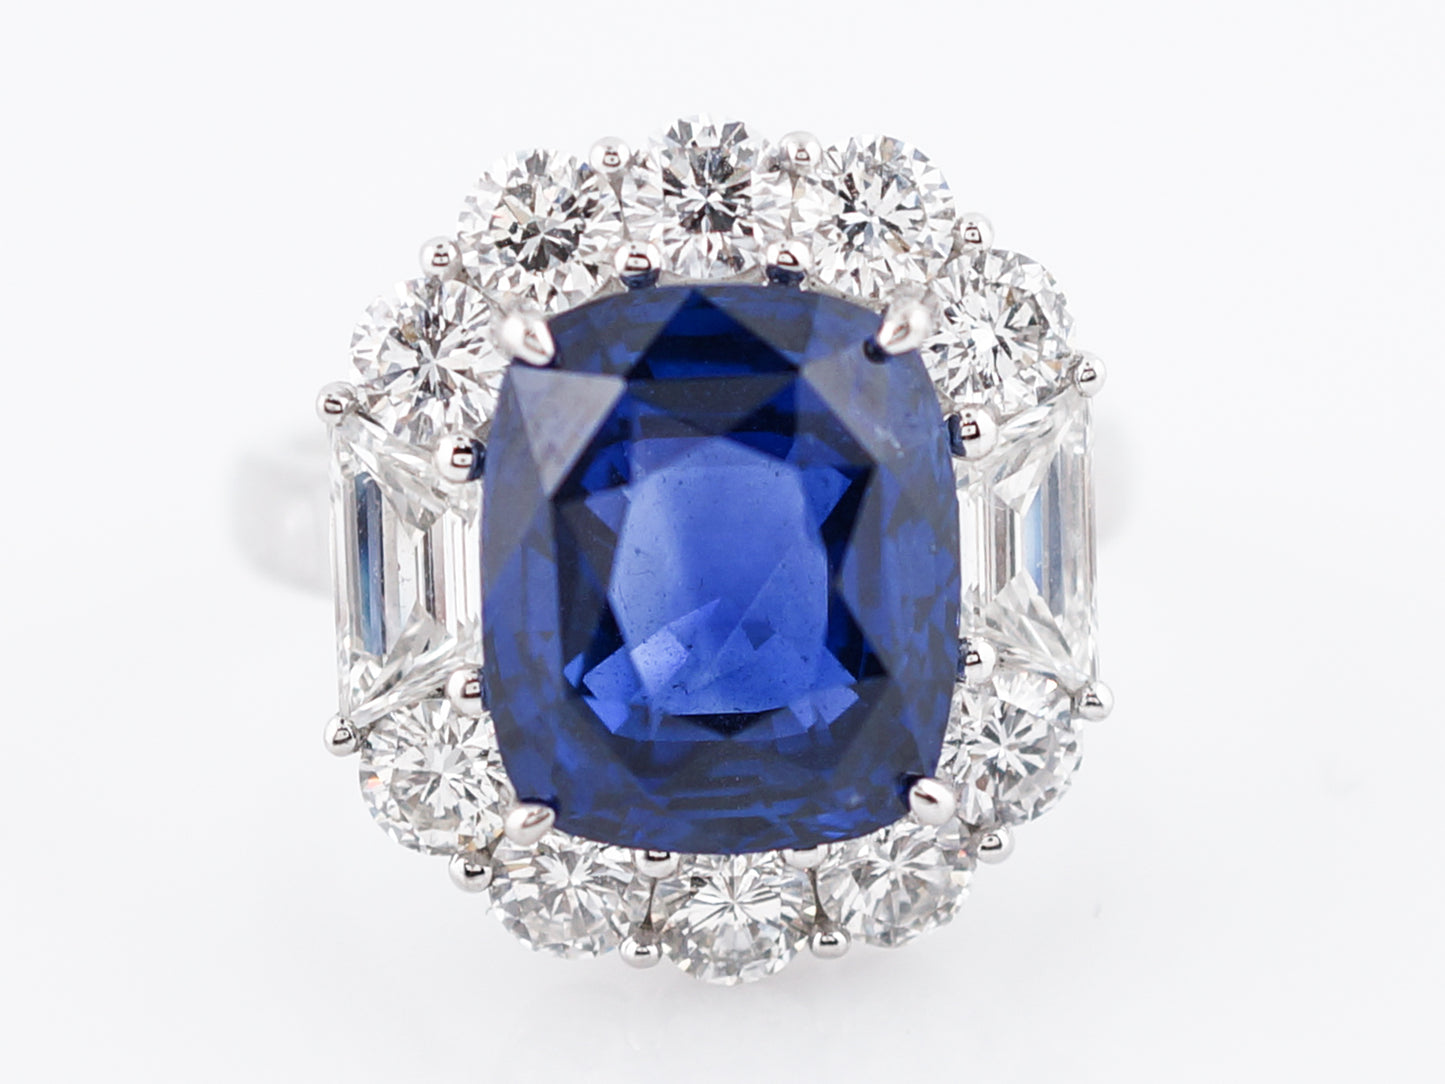 Engagement Ring Modern 7.62 Cushion Cut Sapphire & 2.15 Diamonds in Platinum